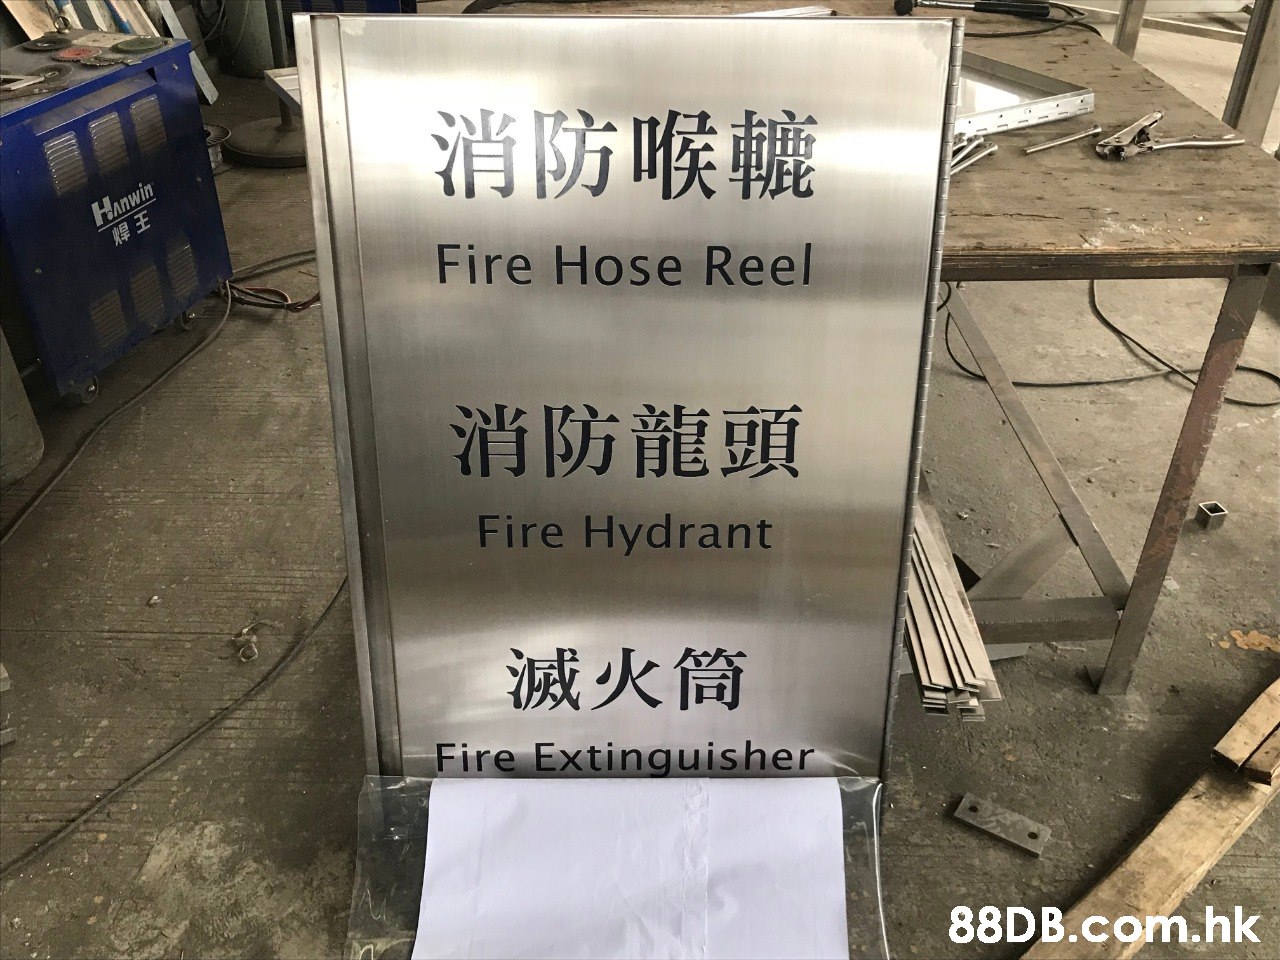 消防喉轆 HAnwin 煌王 Fire Hose Reel 消防龍頭 Fire Hydrant 滅火筒 Fire Extinguisher .hk  Banner,Font,